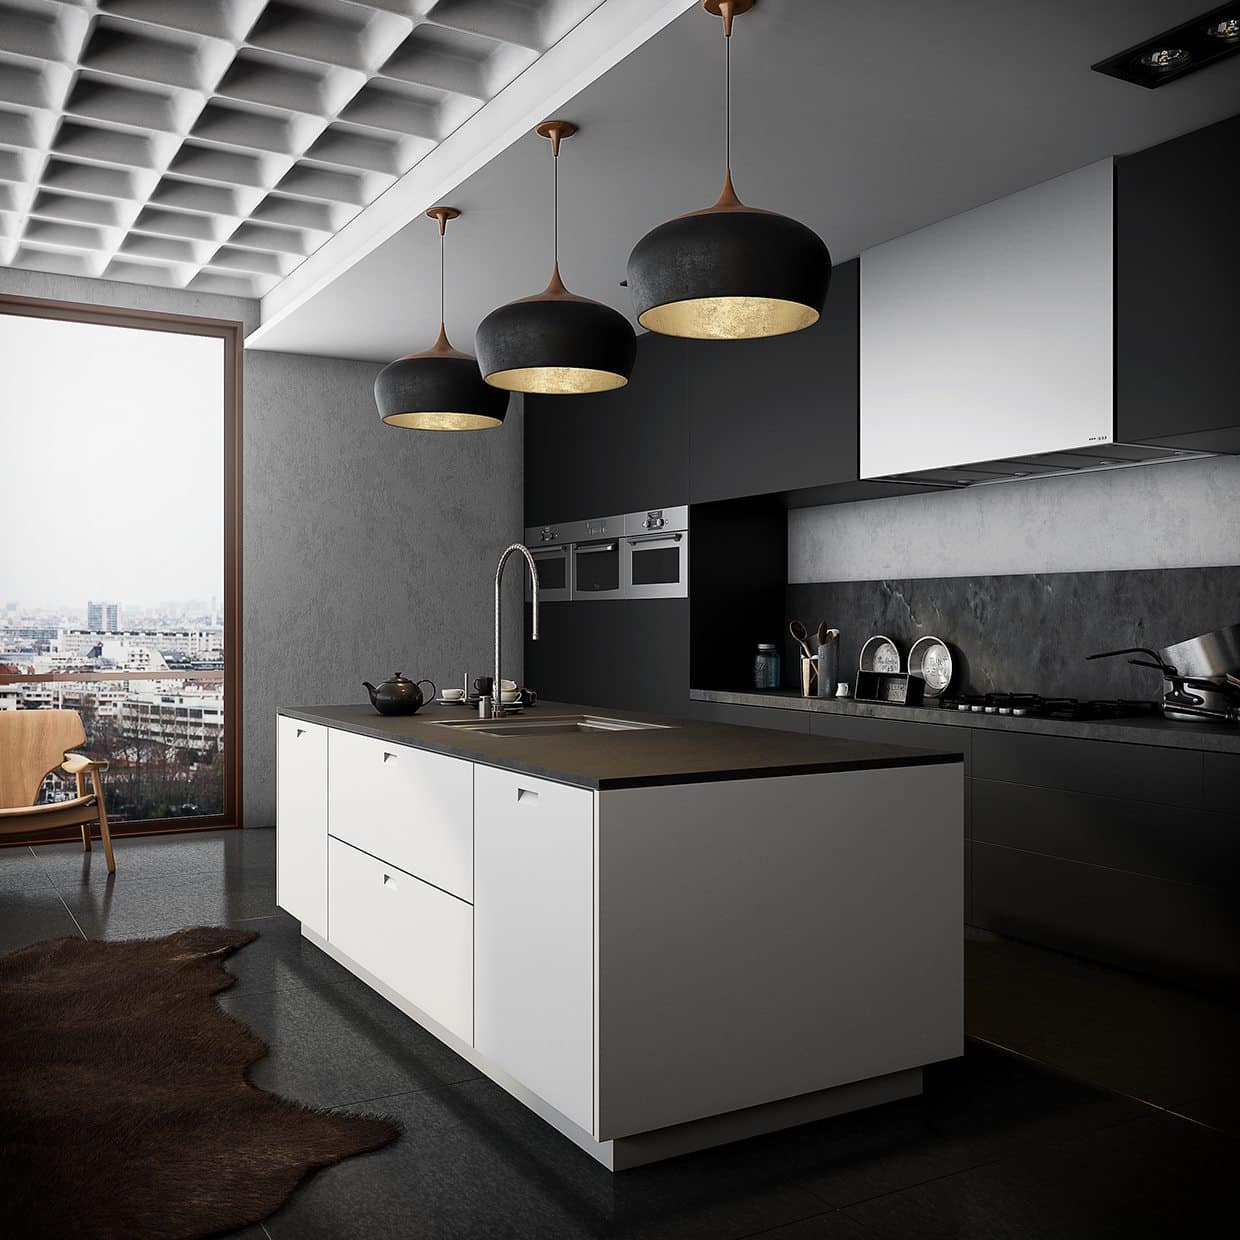 Desain dapur minimalis hitam aneka gradasi Thegorbalsla